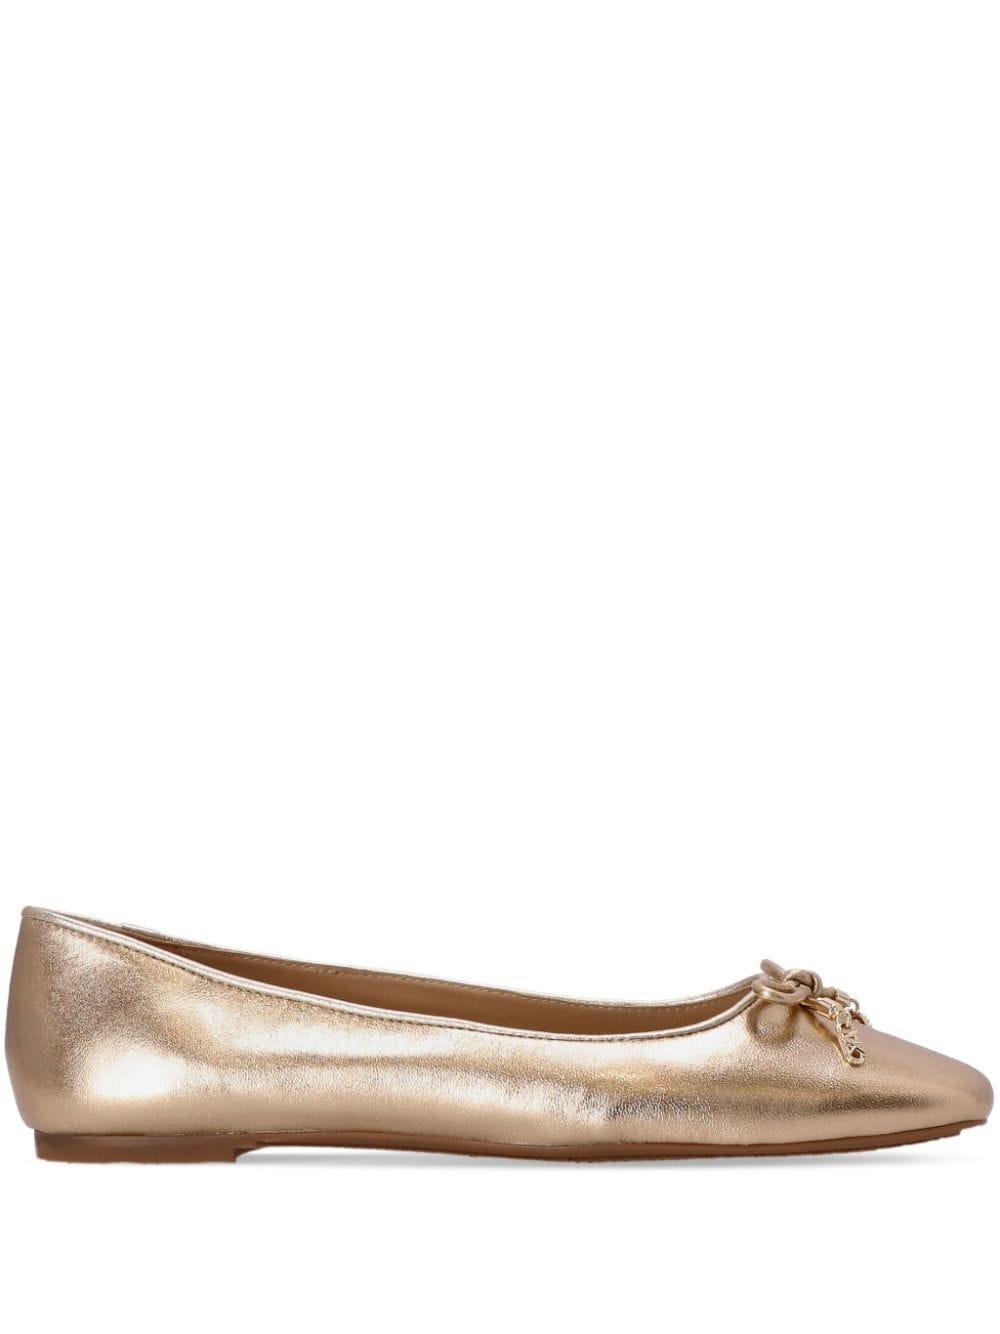 MICHAEL Michael Kors Nori Metallic Ballerina Shoes in Brown | Lyst